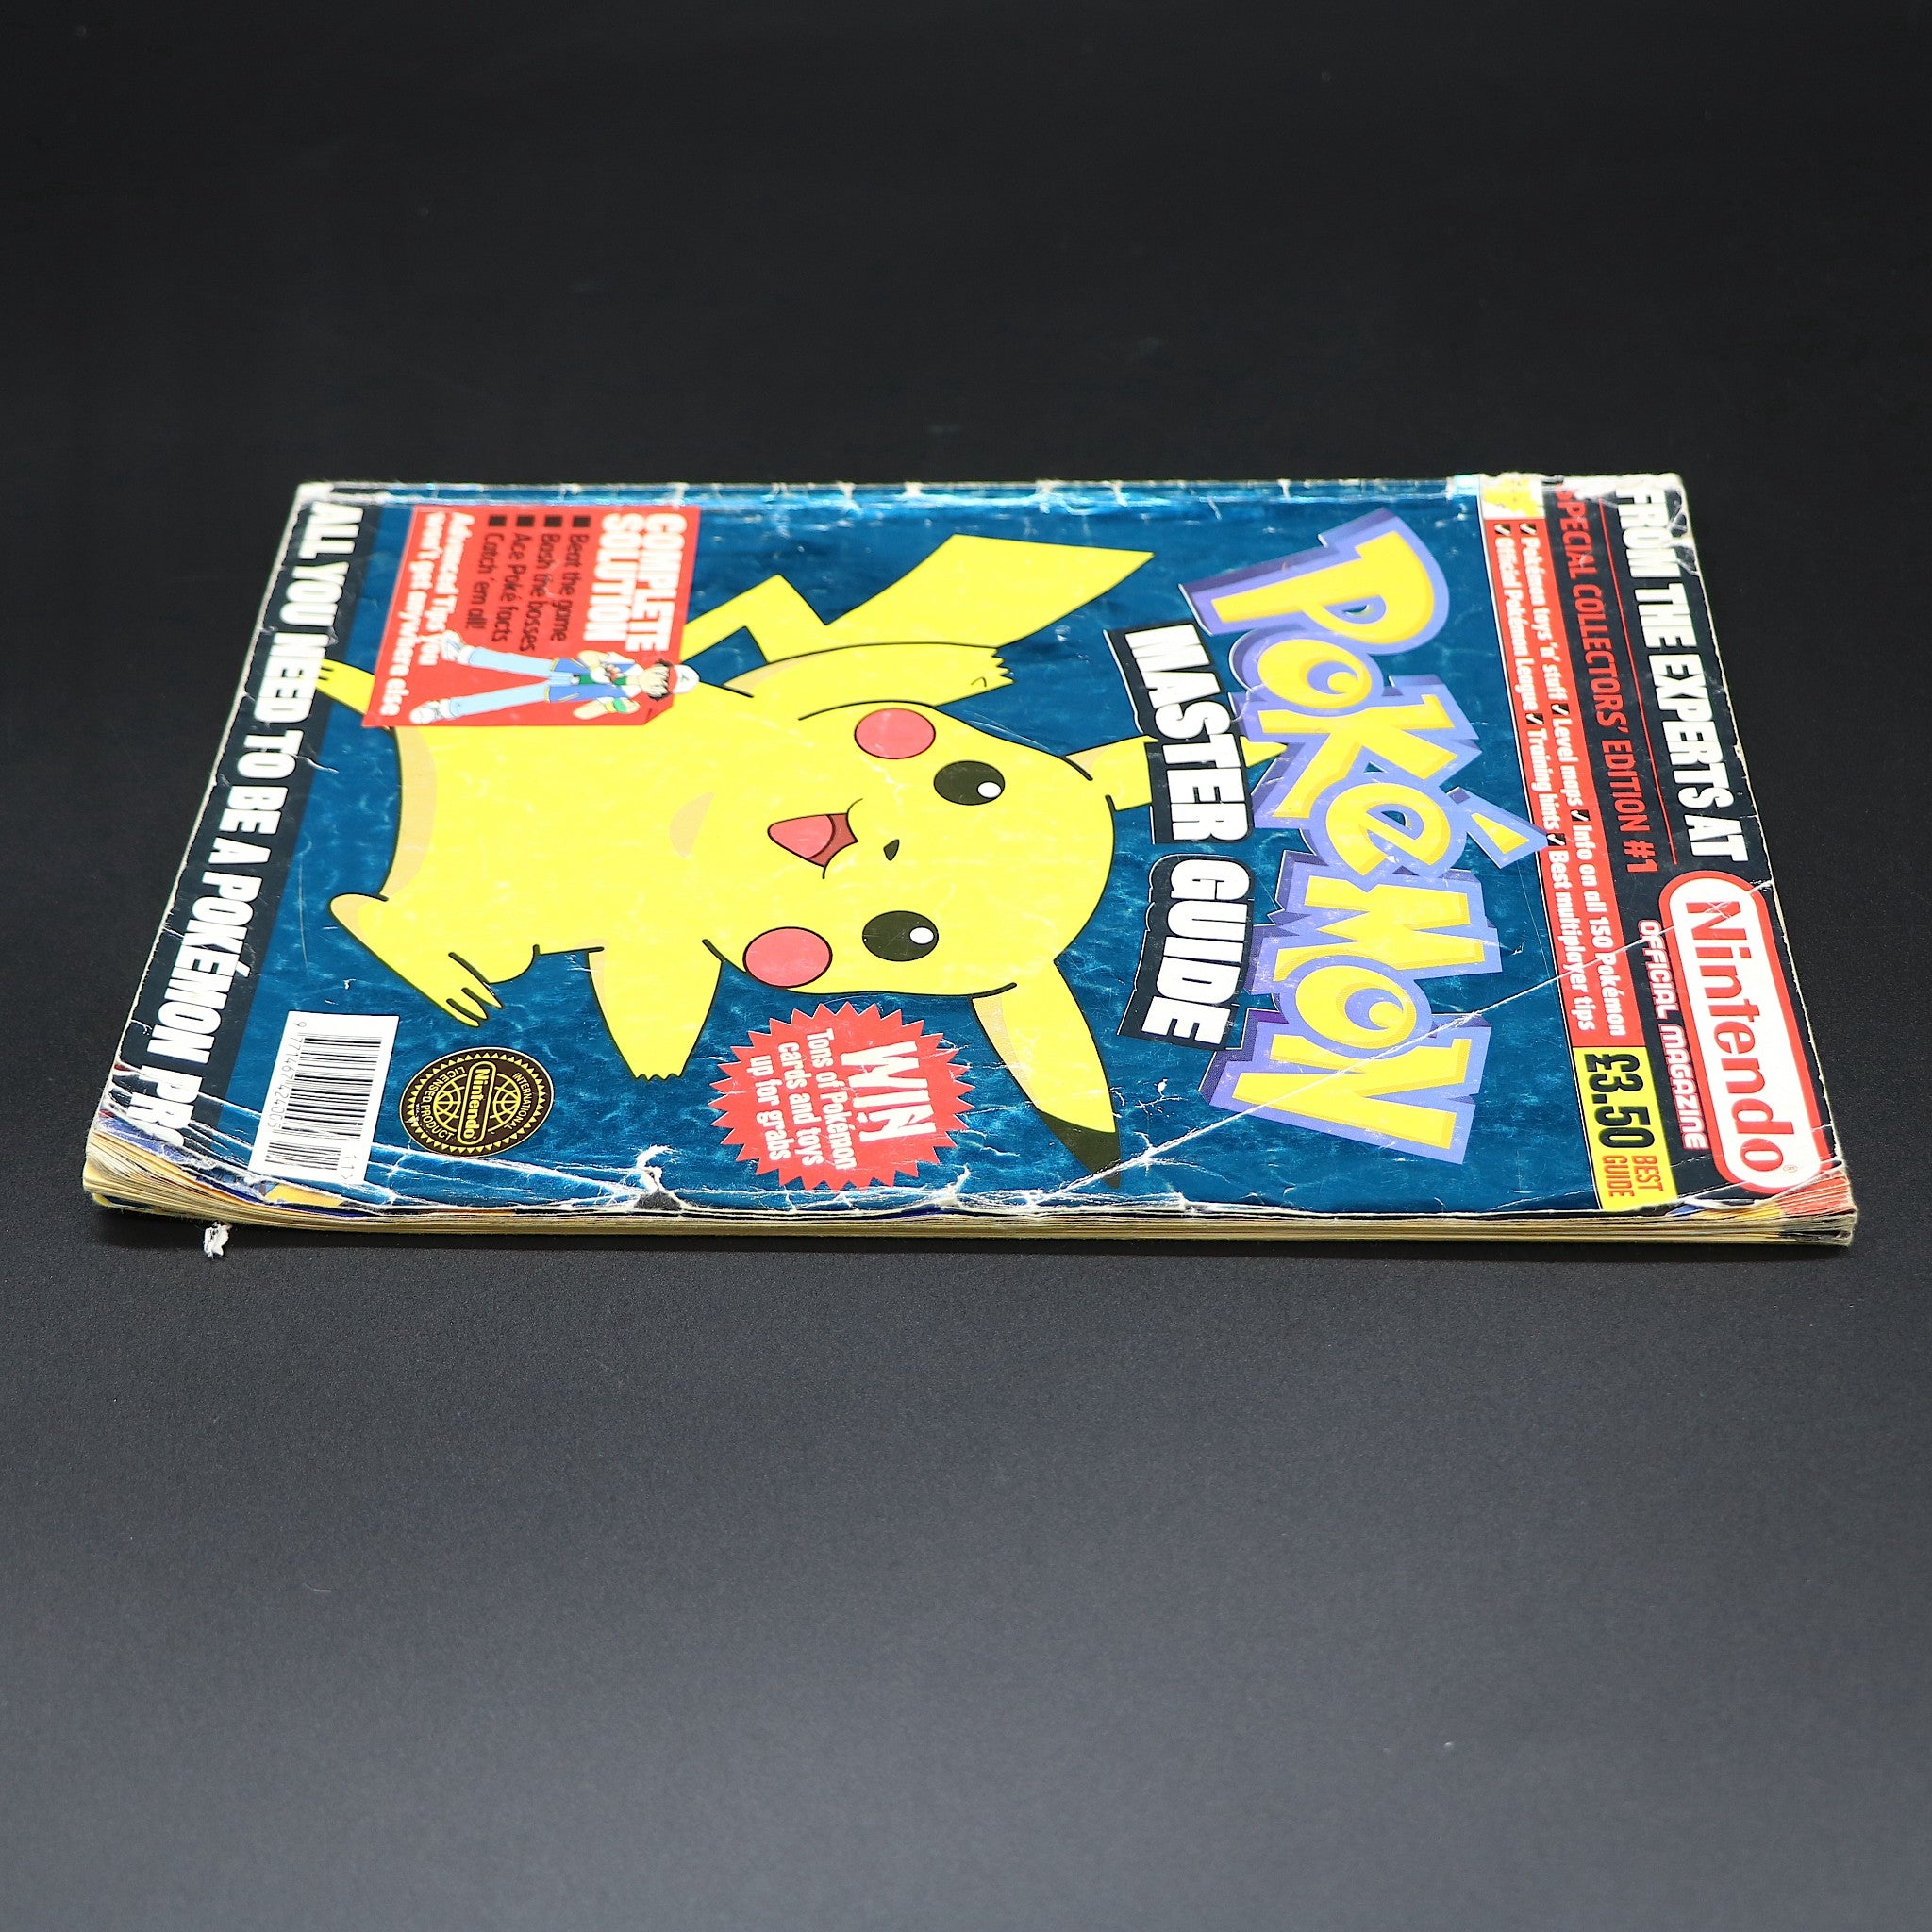 Official Nintendo Magazine NOM UK | Issue 1 | Pokemon Master Guide 1st Edition